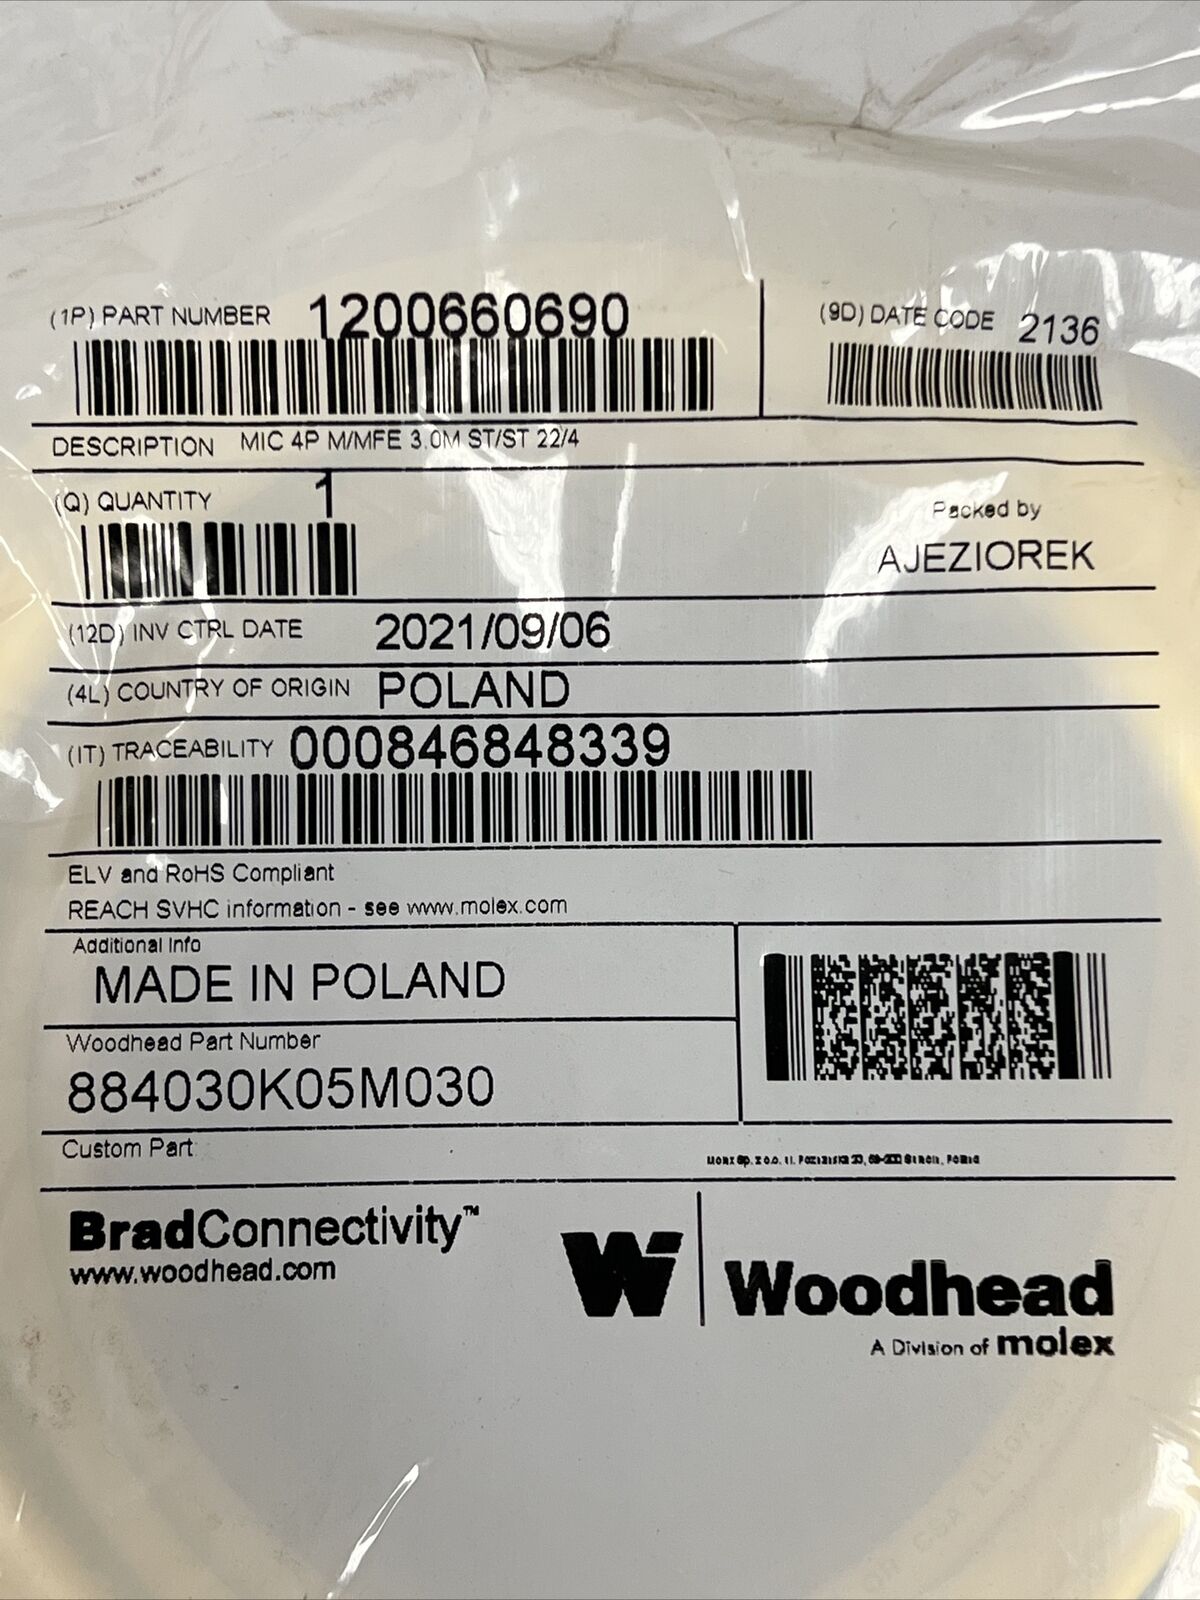 Woodhead BradConnectivity 4-POLE MALE/FEMALE ST/ST 1200660690 3M (BK110)